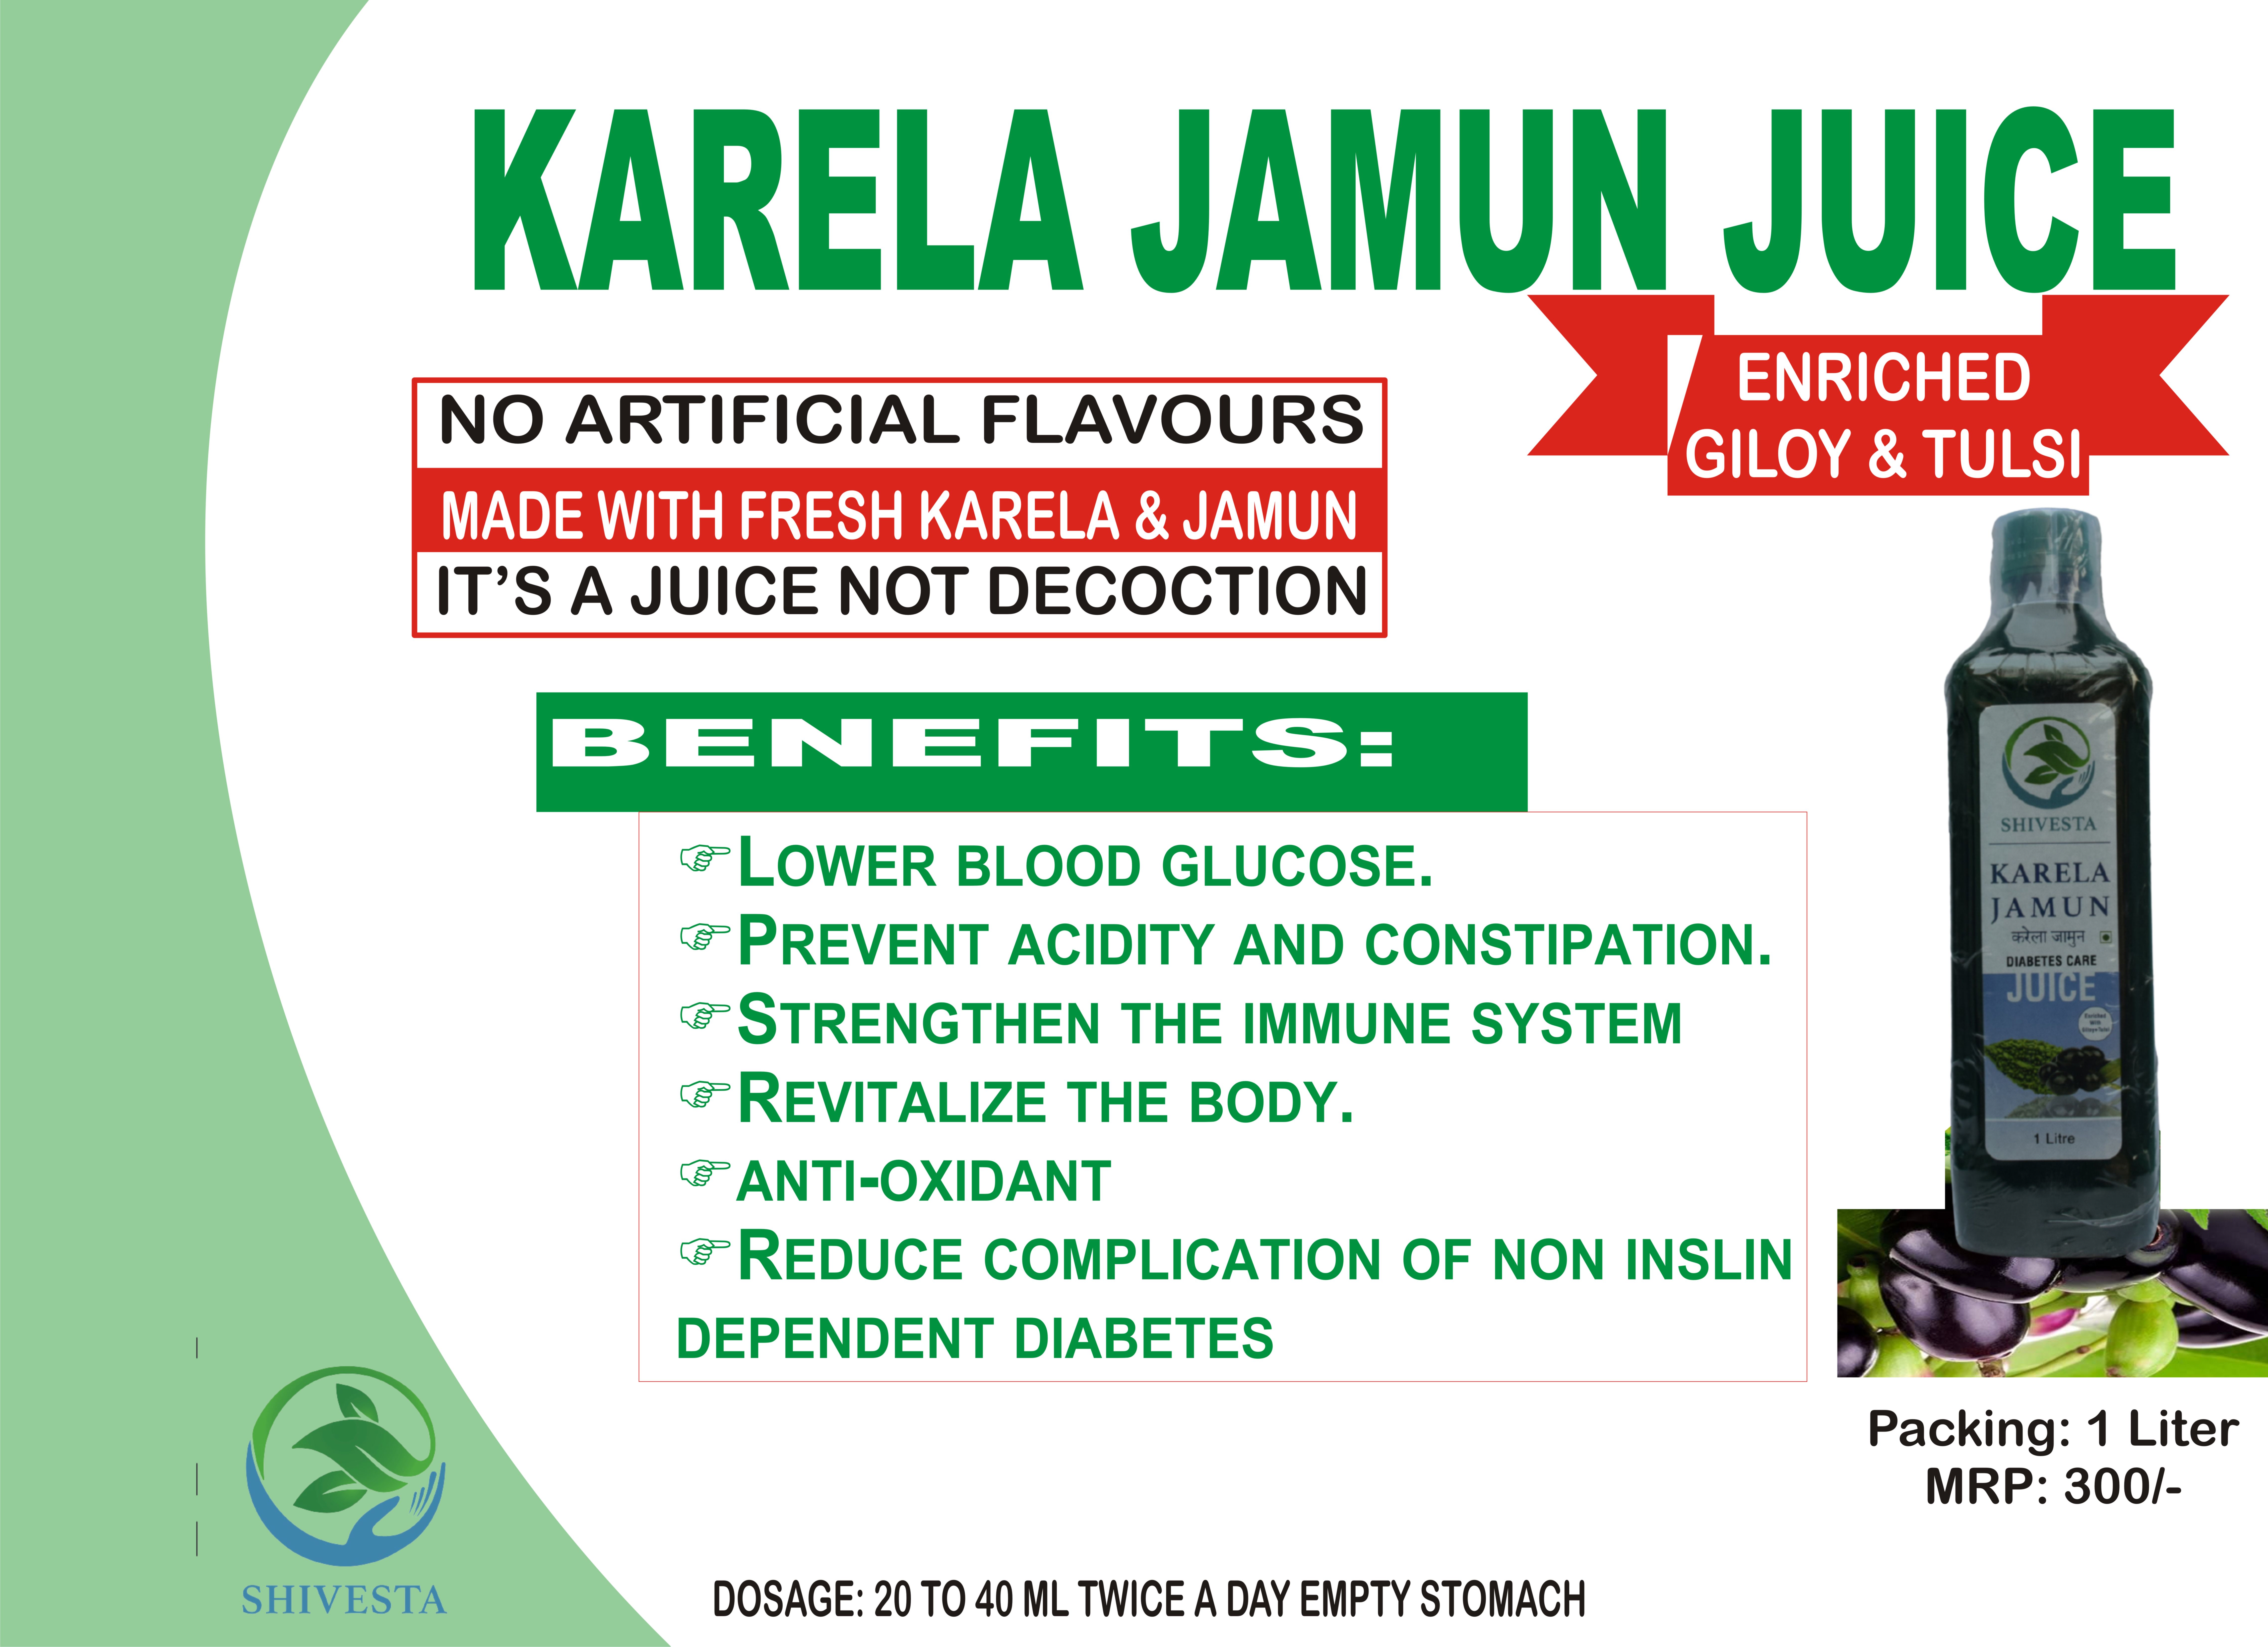 Facts about Karela Jamun Juice